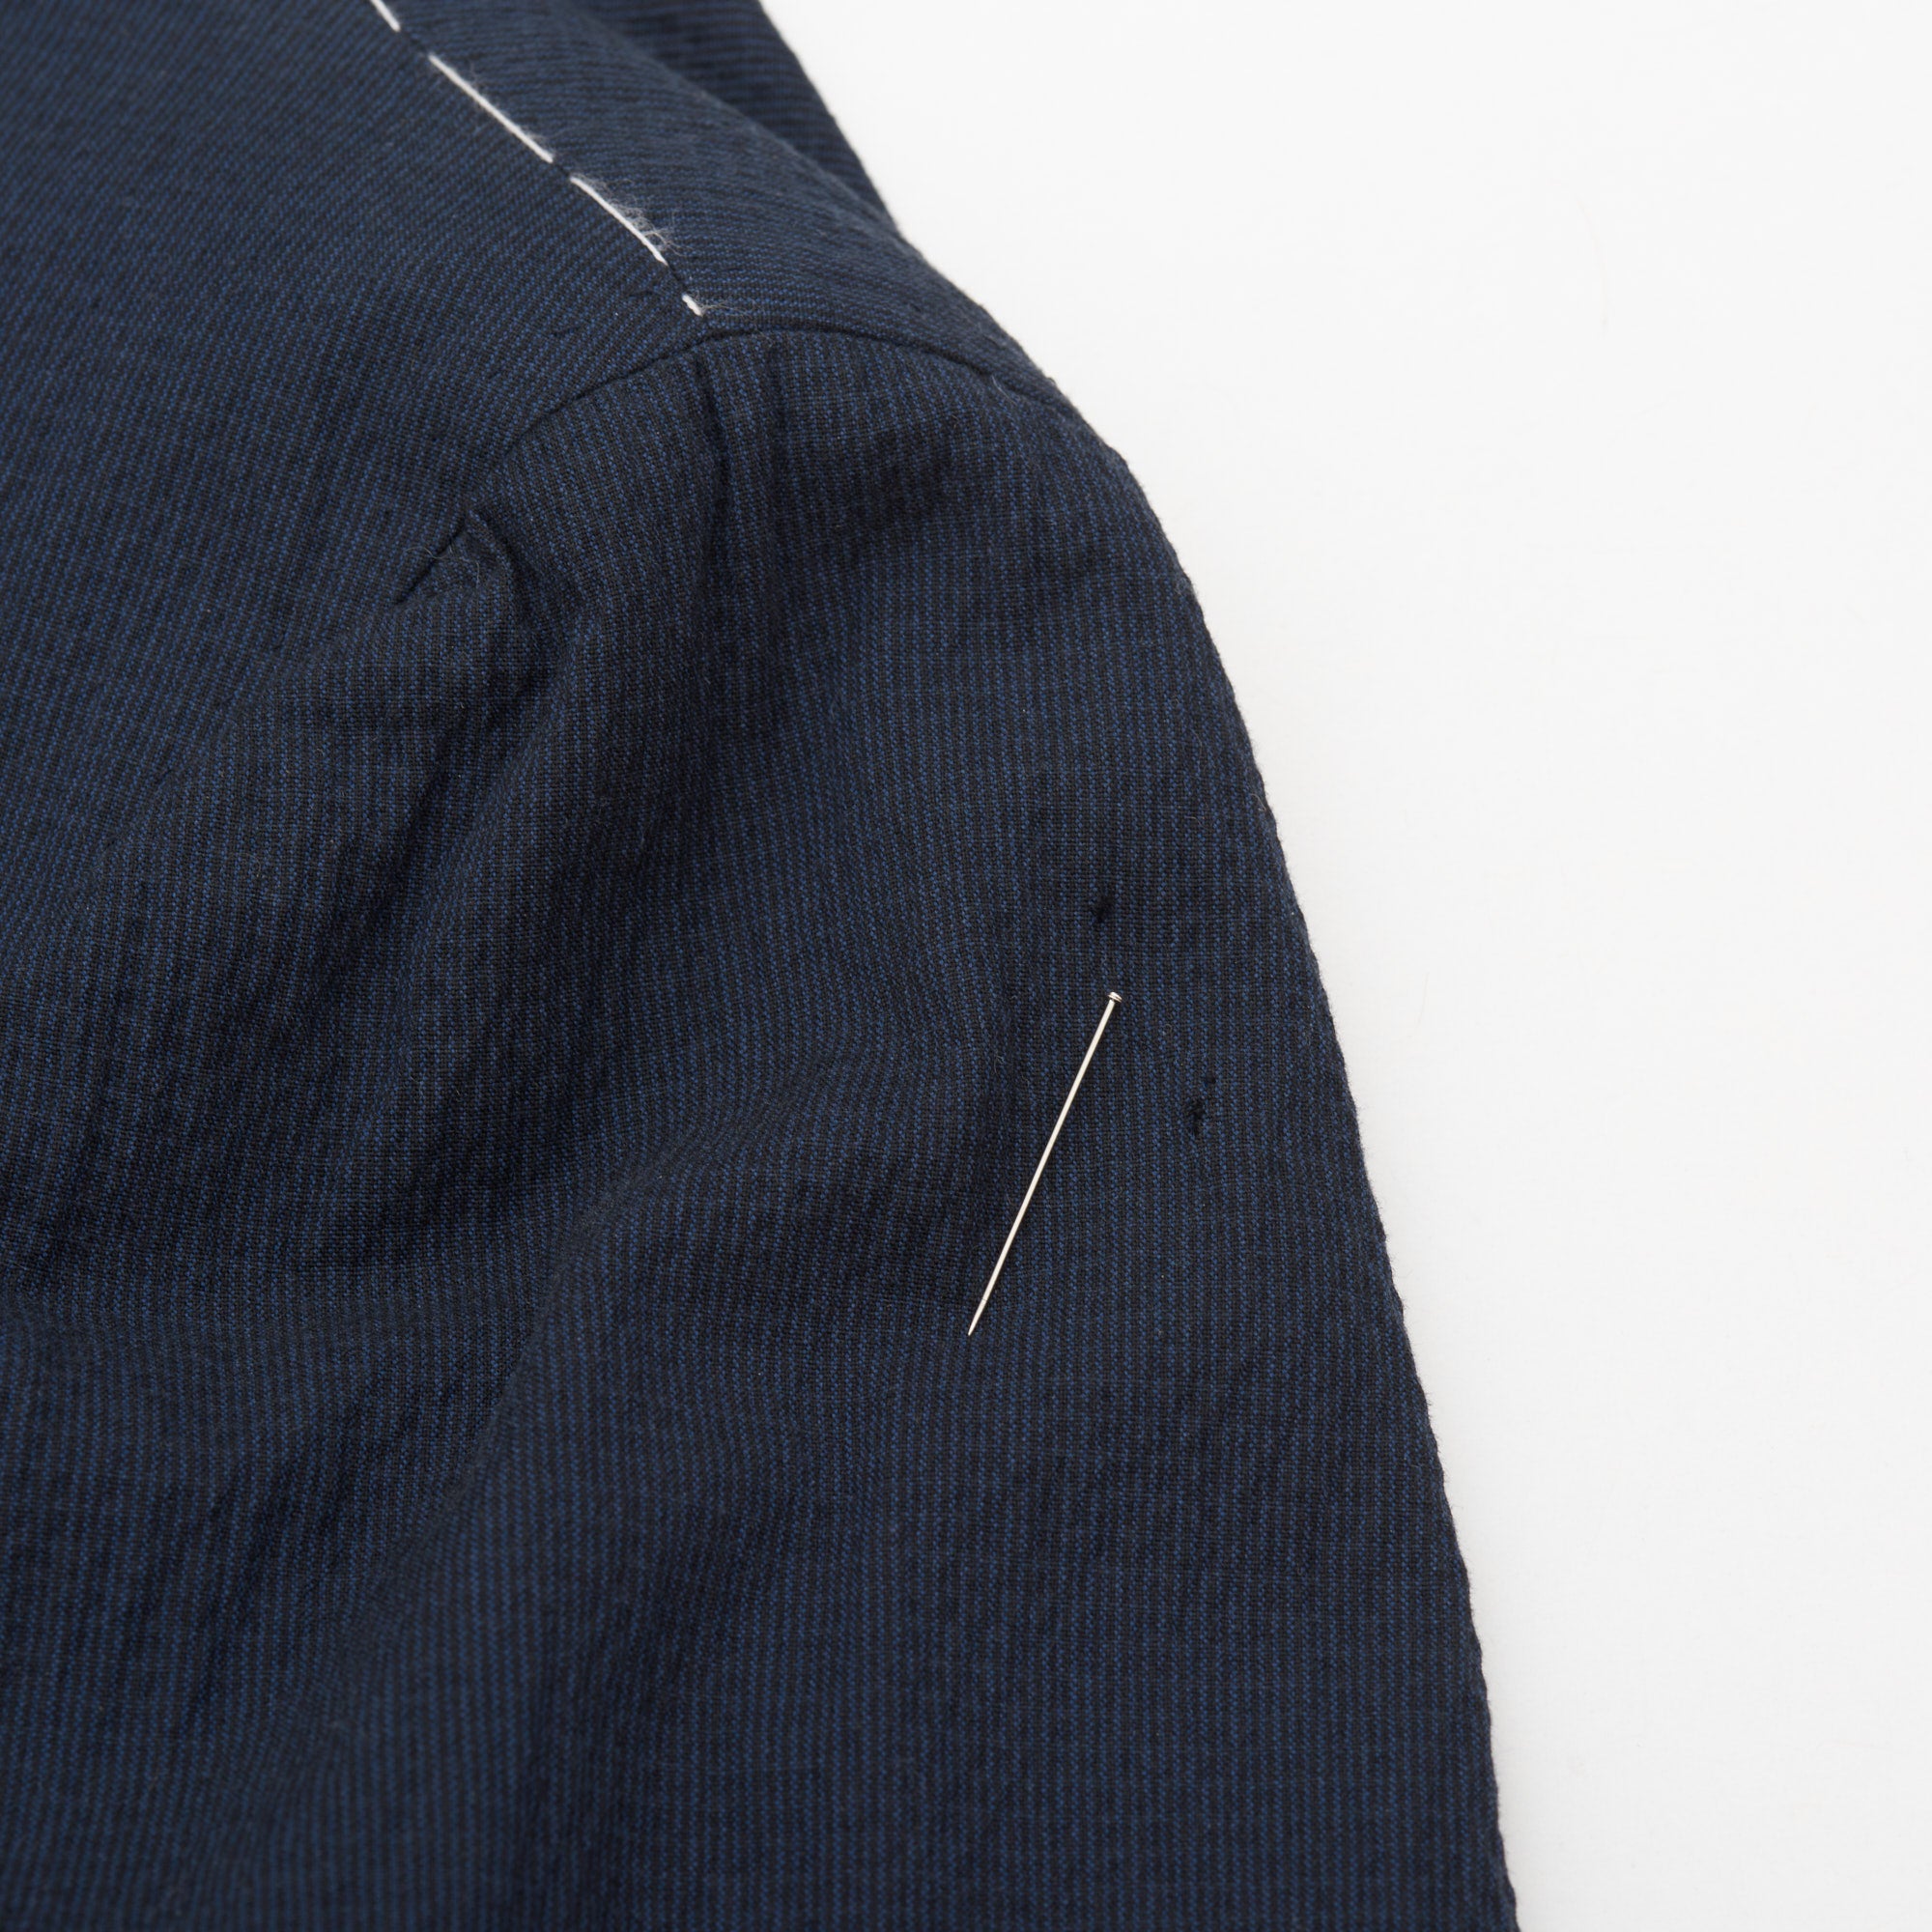 STILE LATINO Napoli Navy Blue Seersucker Cotton Suit EU 48 NEW US 38 Defect STILE LATINO